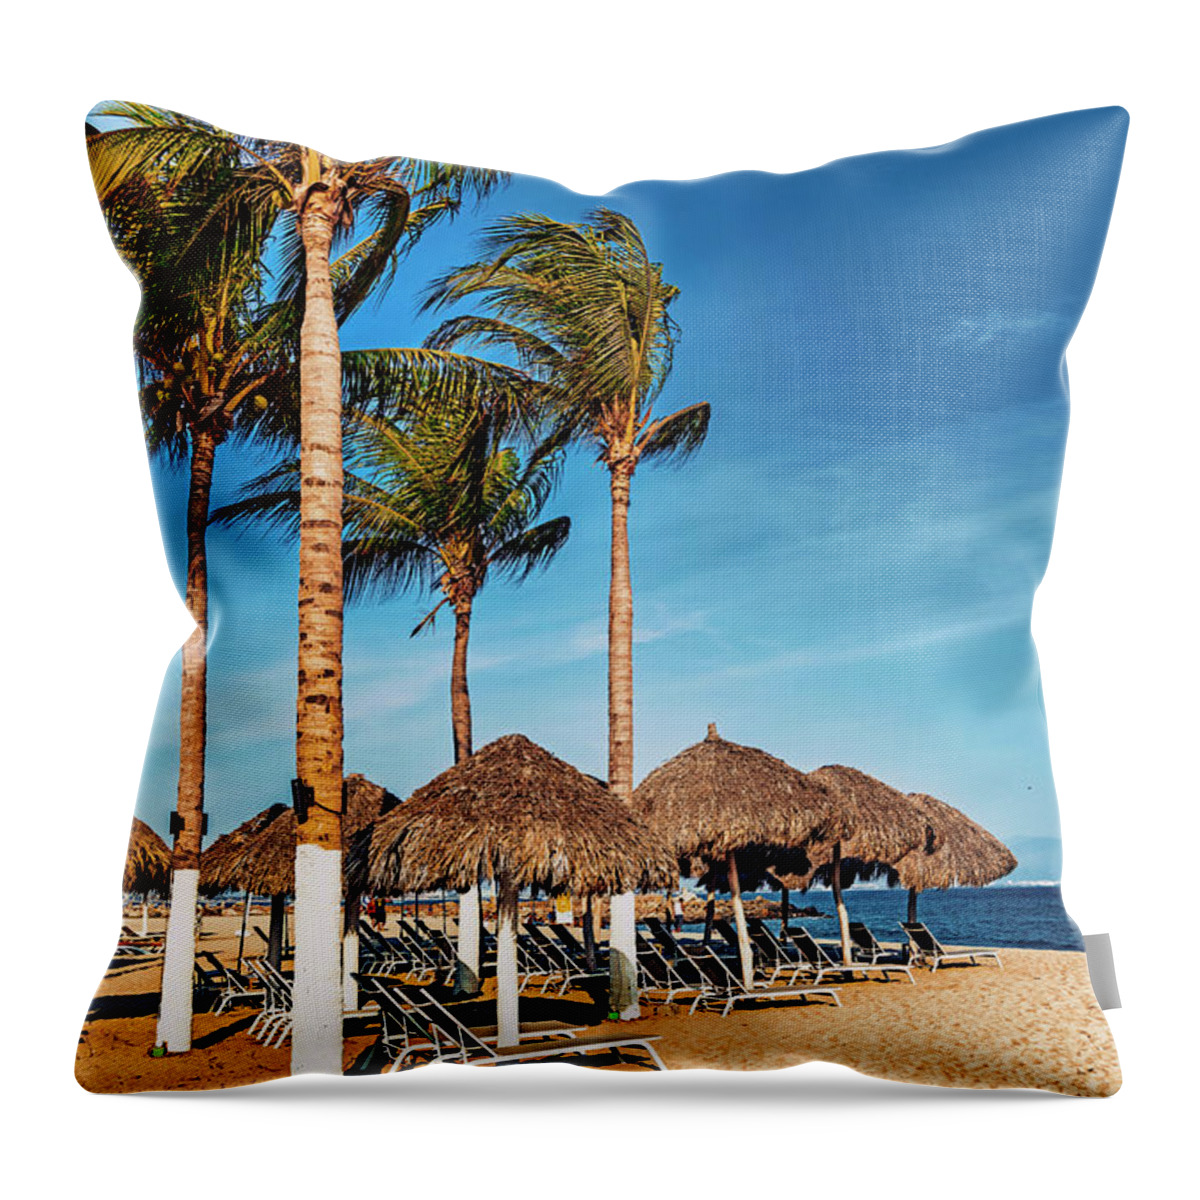 Estock Throw Pillow featuring the digital art Mexico, Nayarit, Beach Scene At La Manzanilla Beach #2 by Claudia Uripos